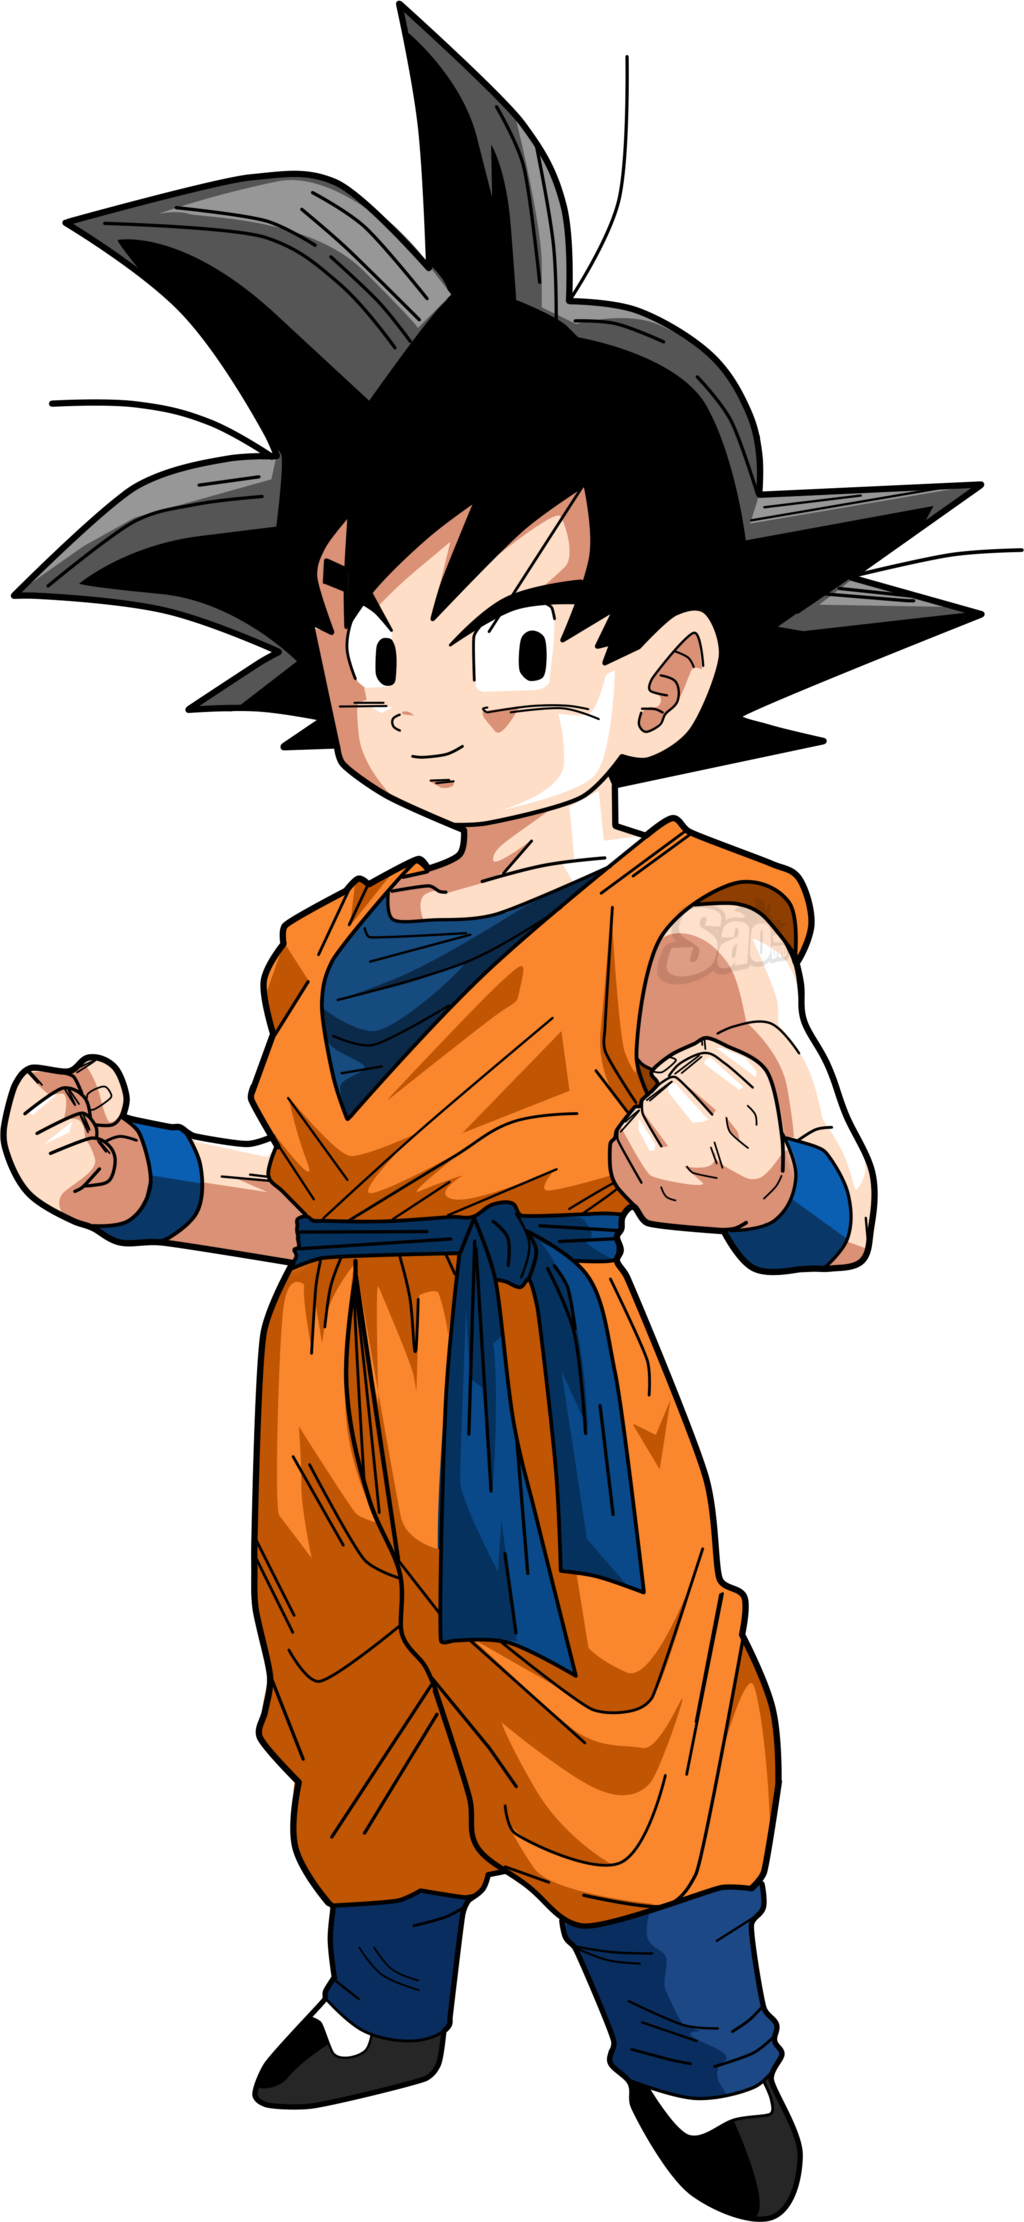 Imagen - Goku pequeño-0.png | Dragon Ball Fanon Wiki ...